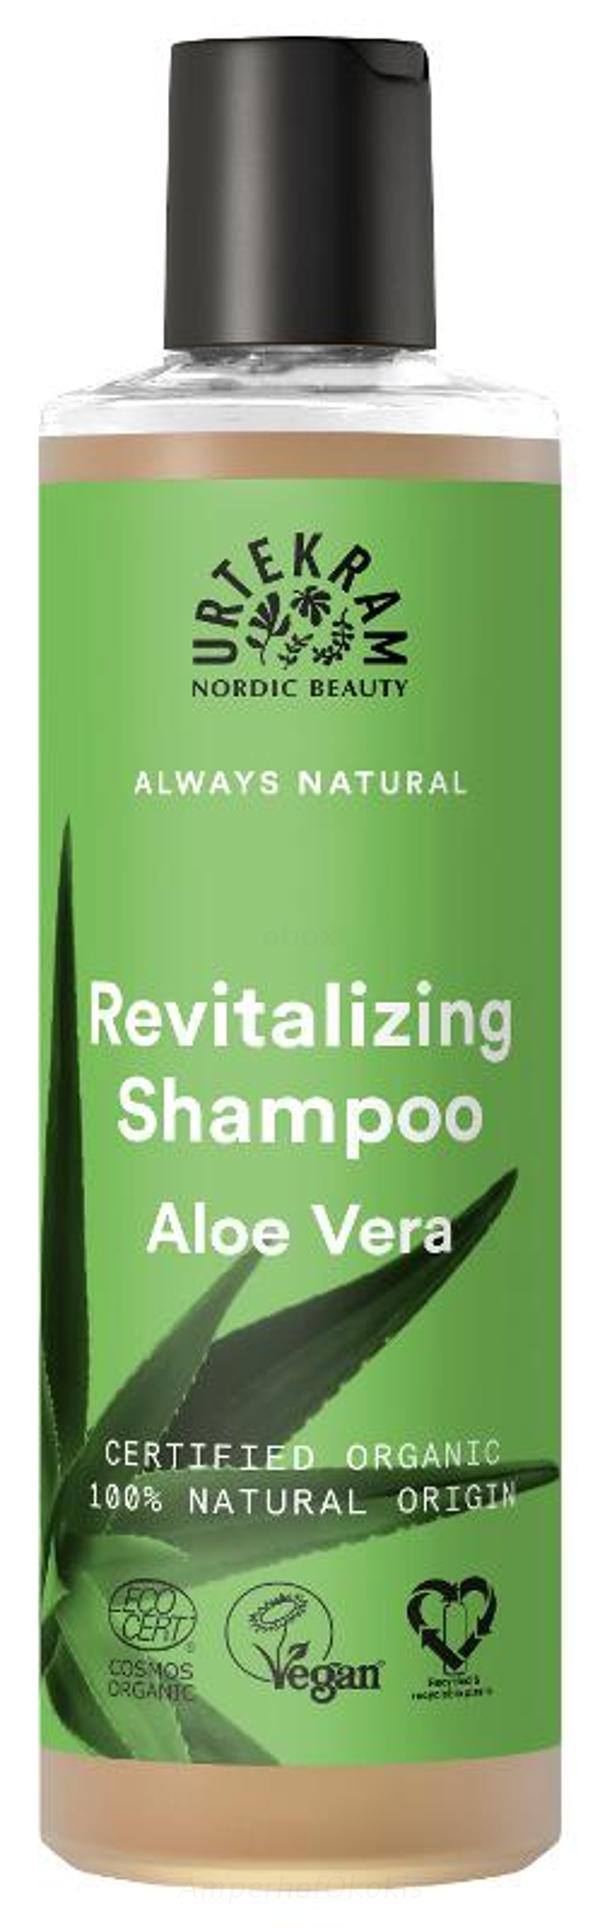 Produktfoto zu Shampoo Aloe Vera 250 ml